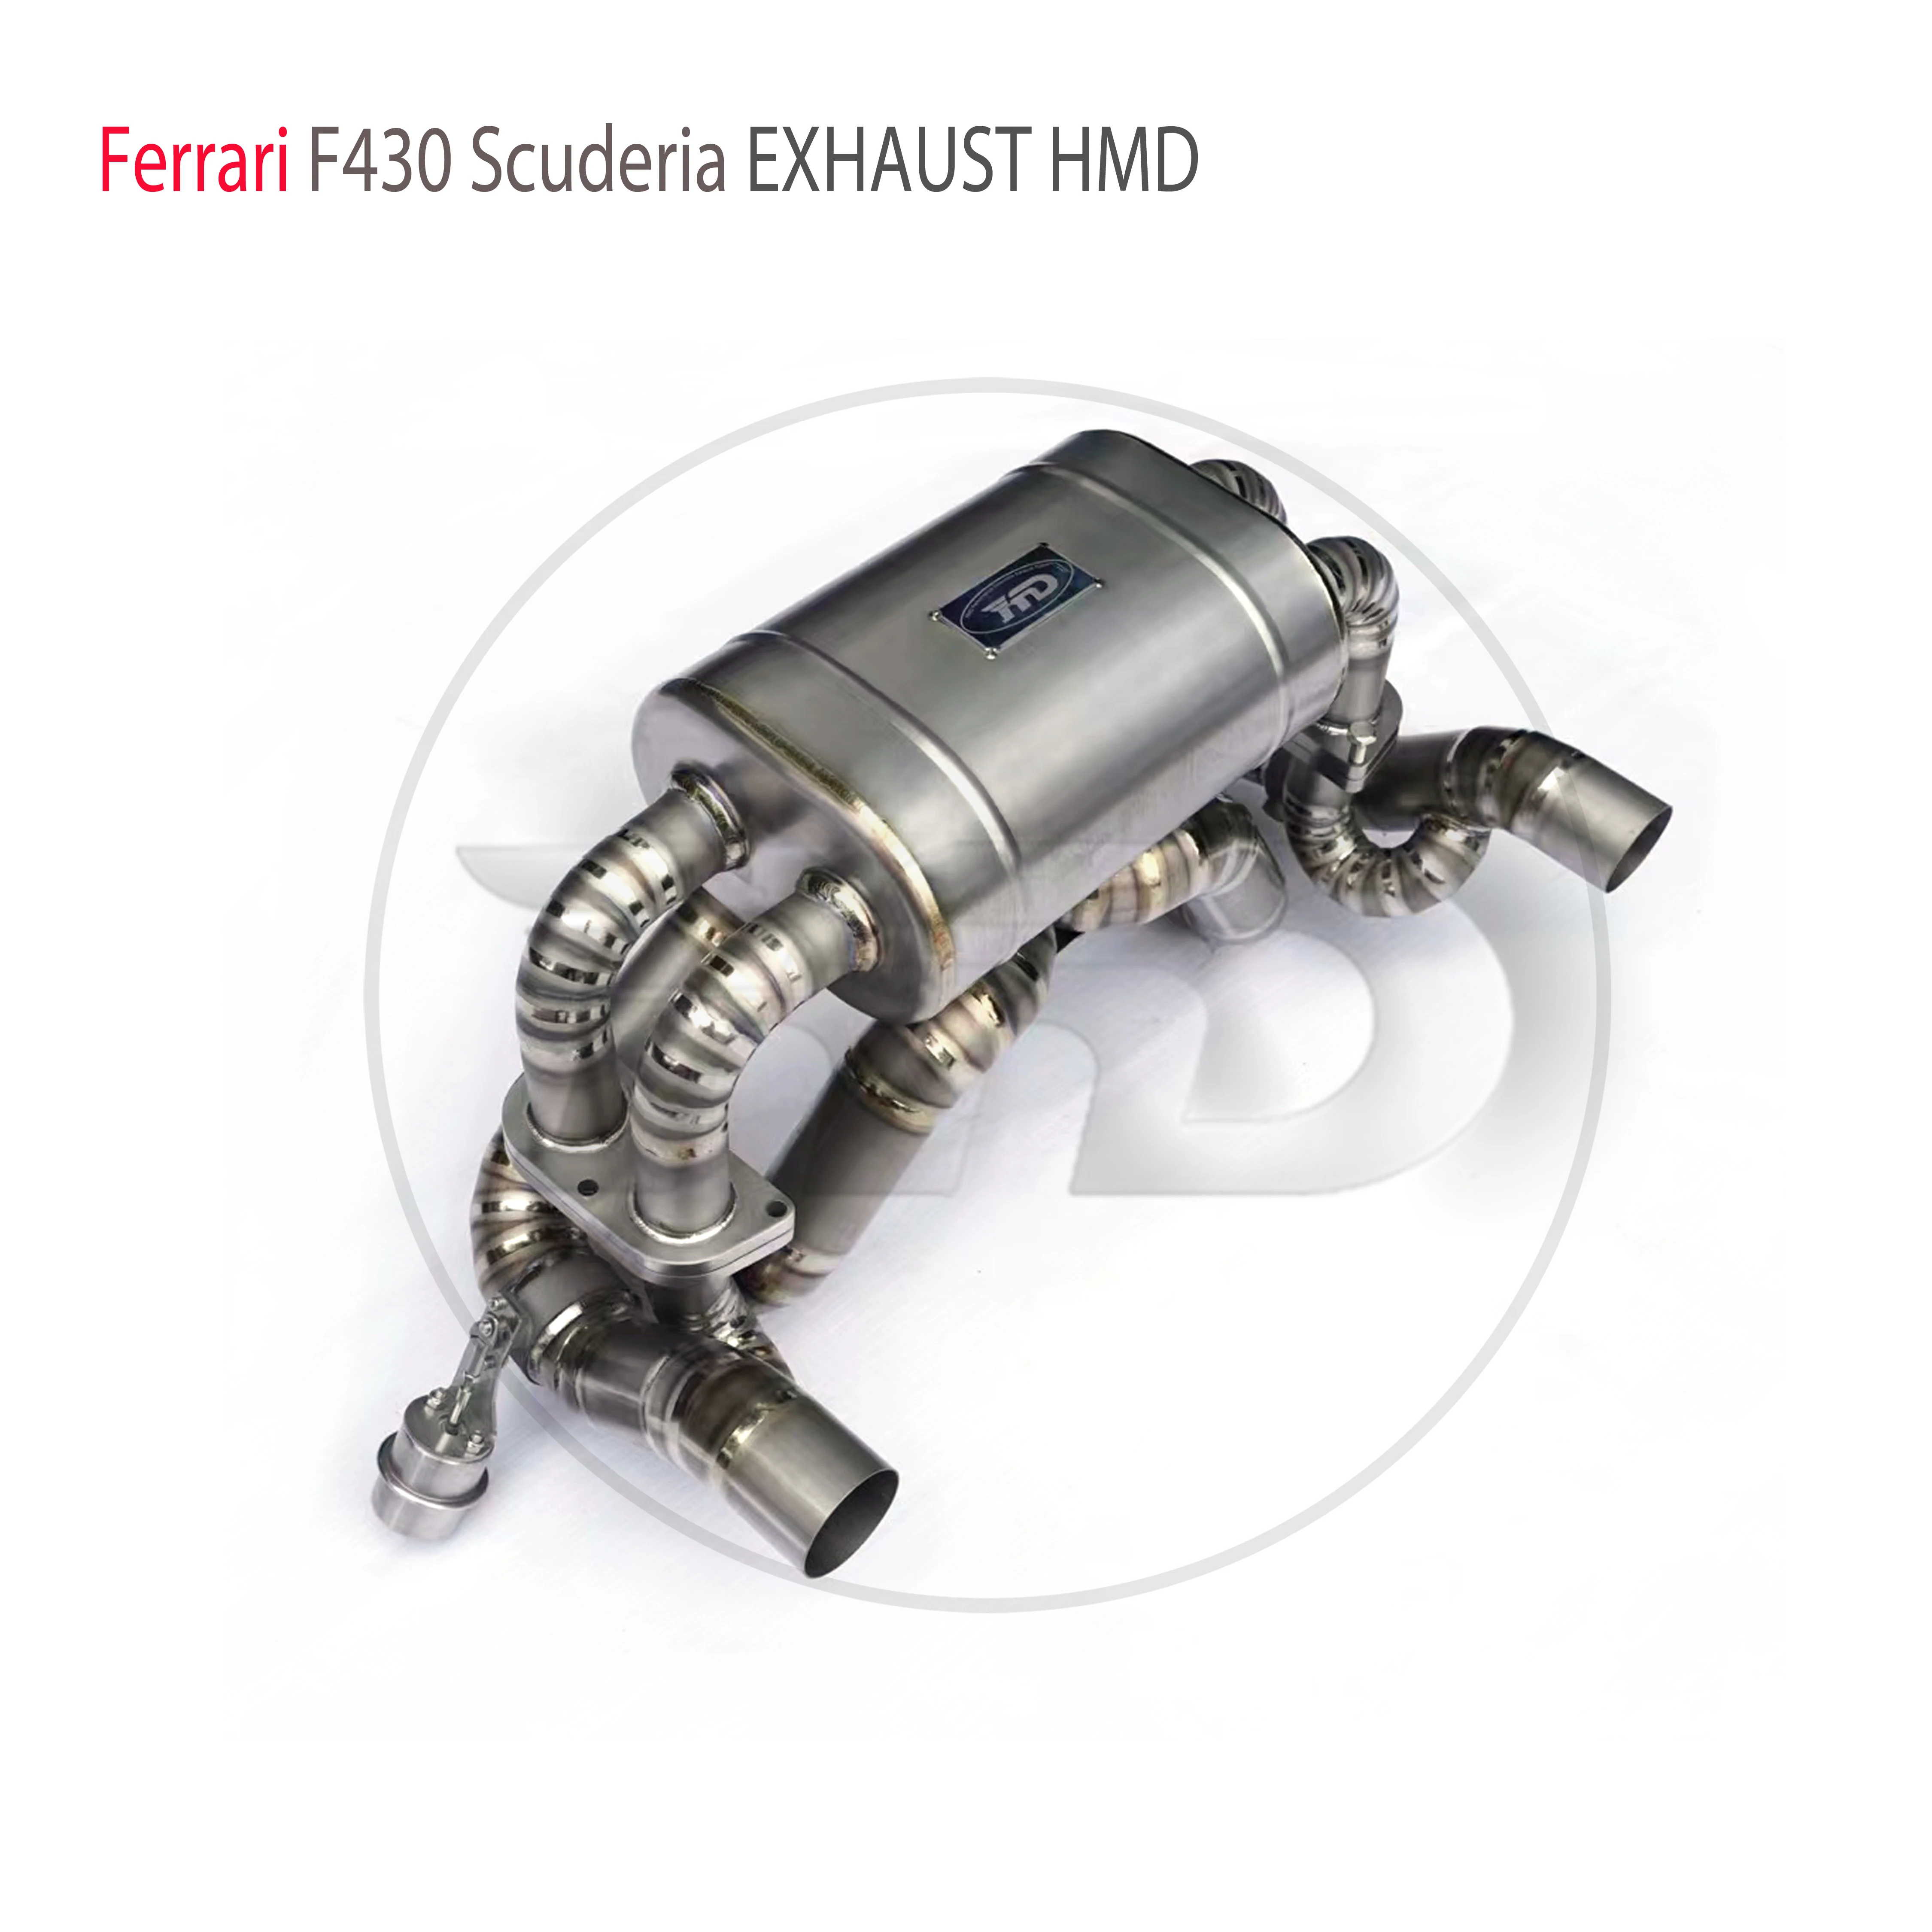 

HMD Titanium Alloy Exhaust System Performance Catback for Ferrari F430 Scuderia Auto Modification Electronic Valve Muffler